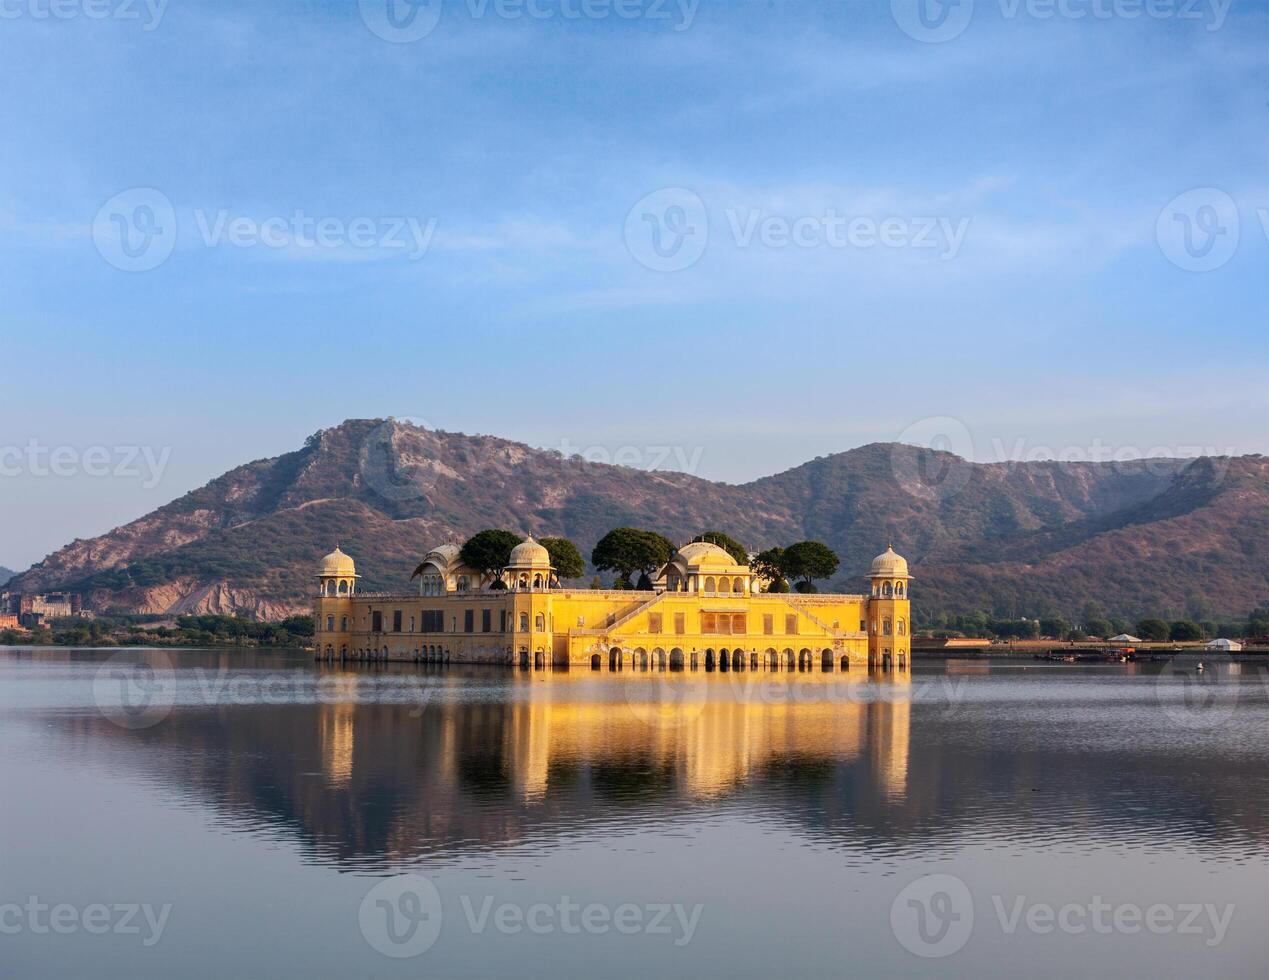 jal mahal agua palacio . jaipur, rajastán, India foto